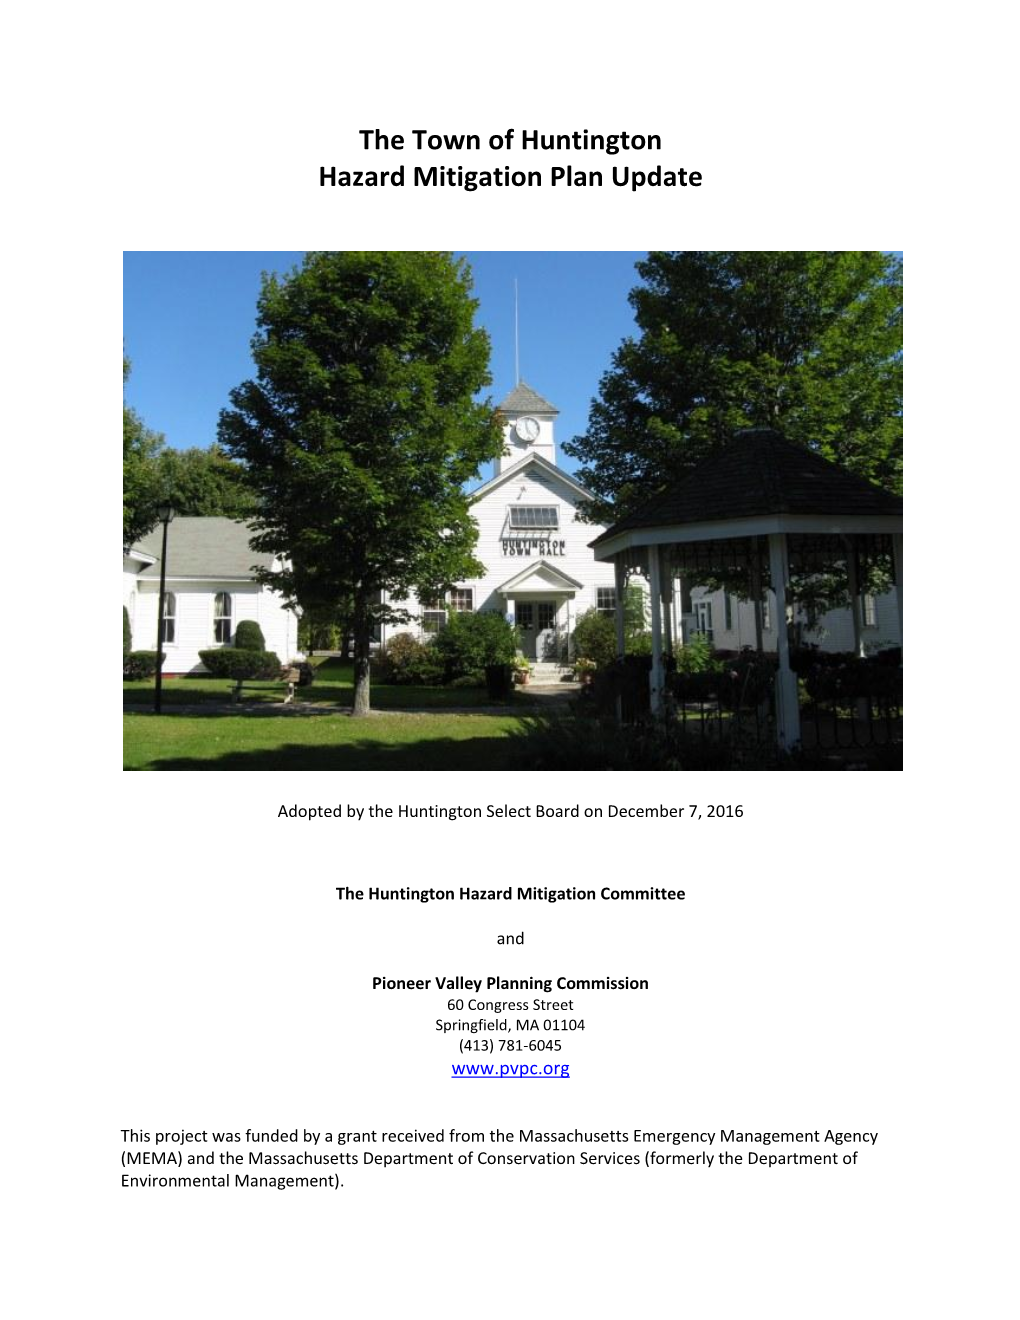 The Town of Huntington Hazard Mitigation Plan Update